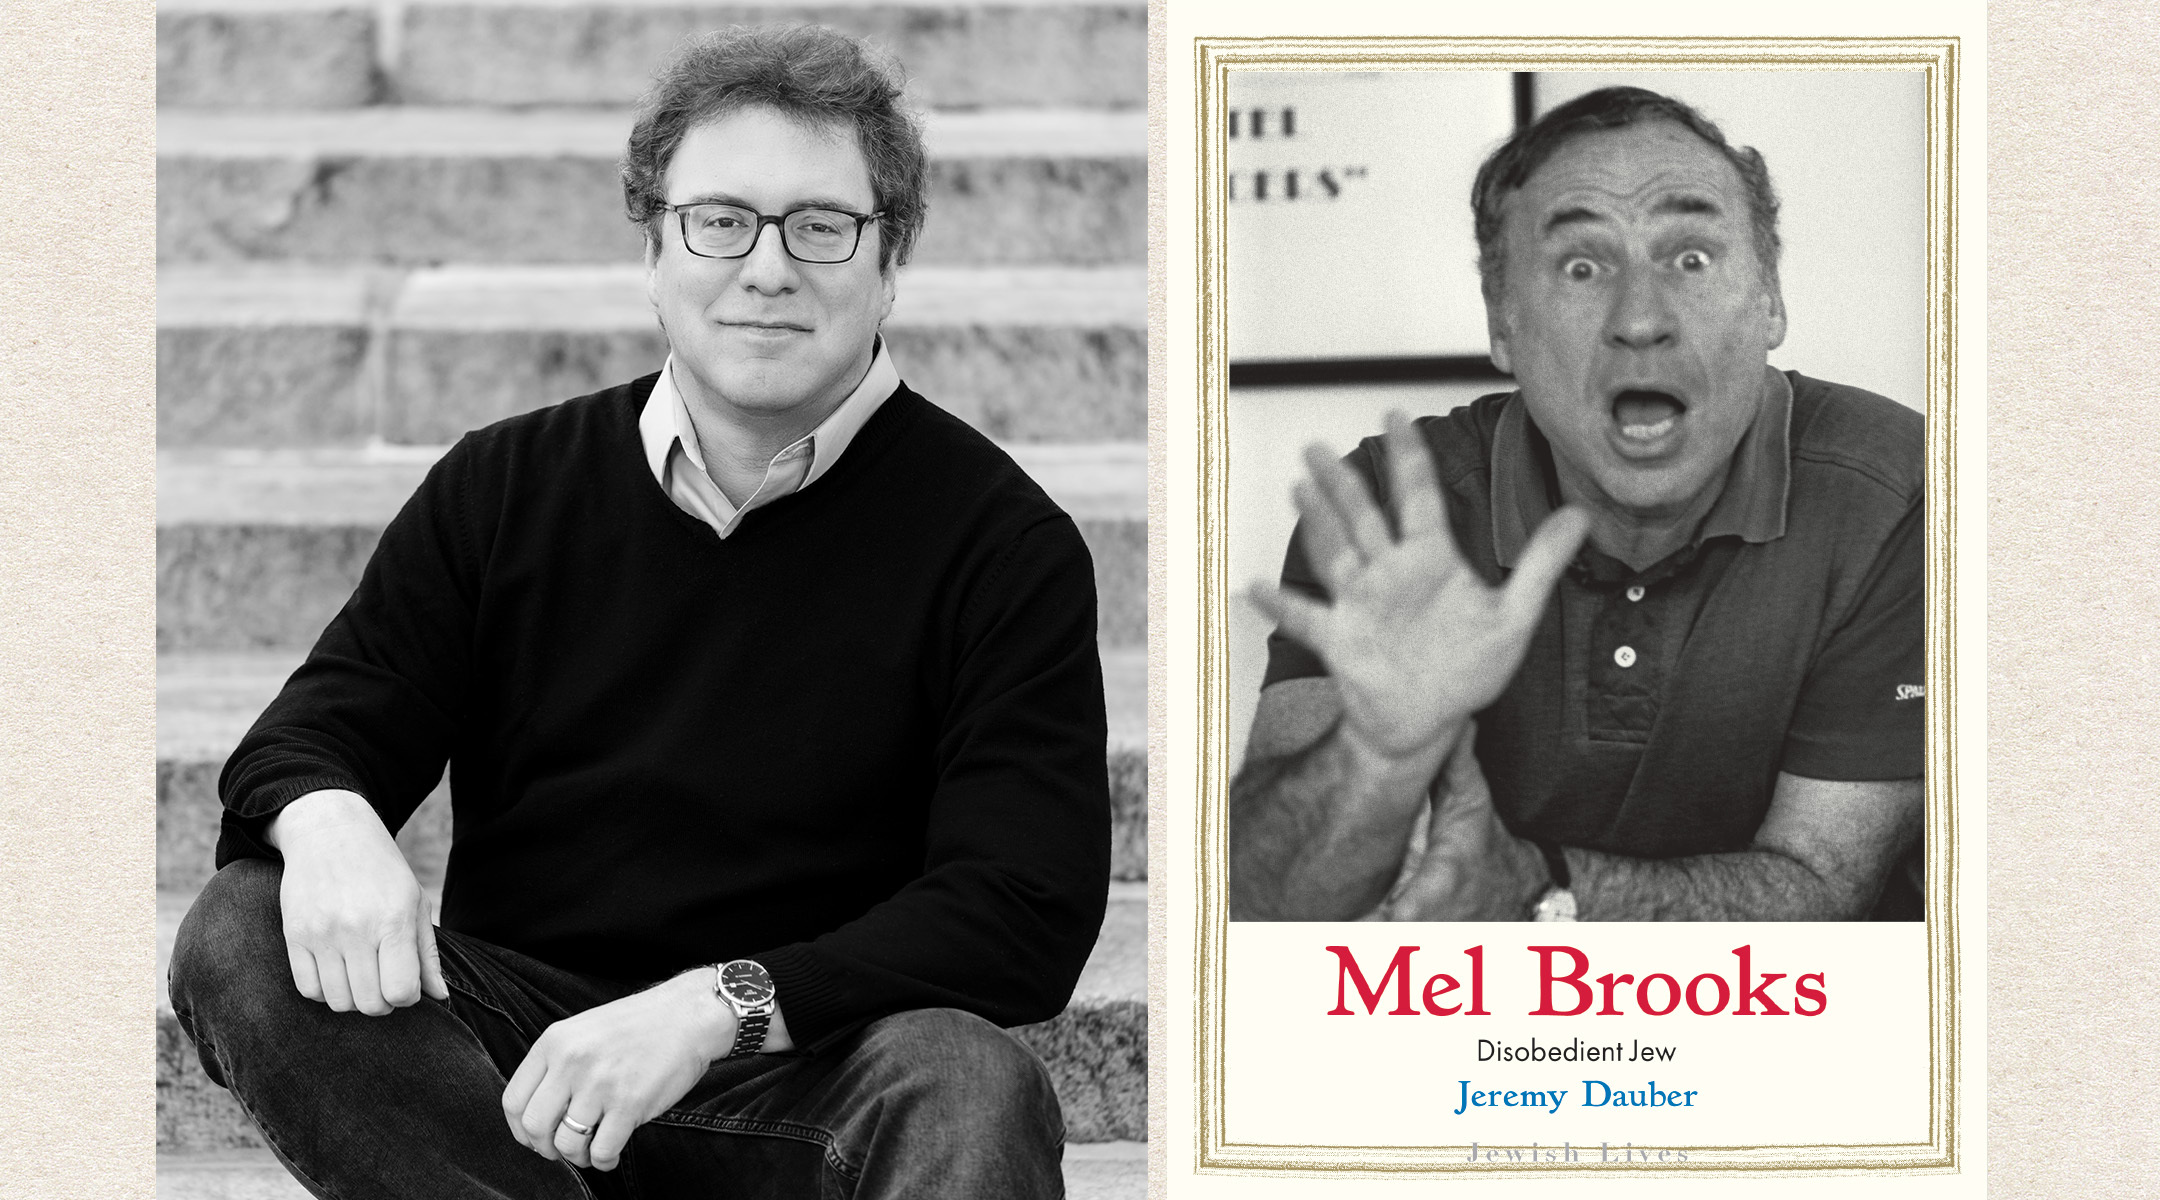 Jeremy Dauber is the author of “Mel Brooks: Disobedient Jew” (Yale University Press)